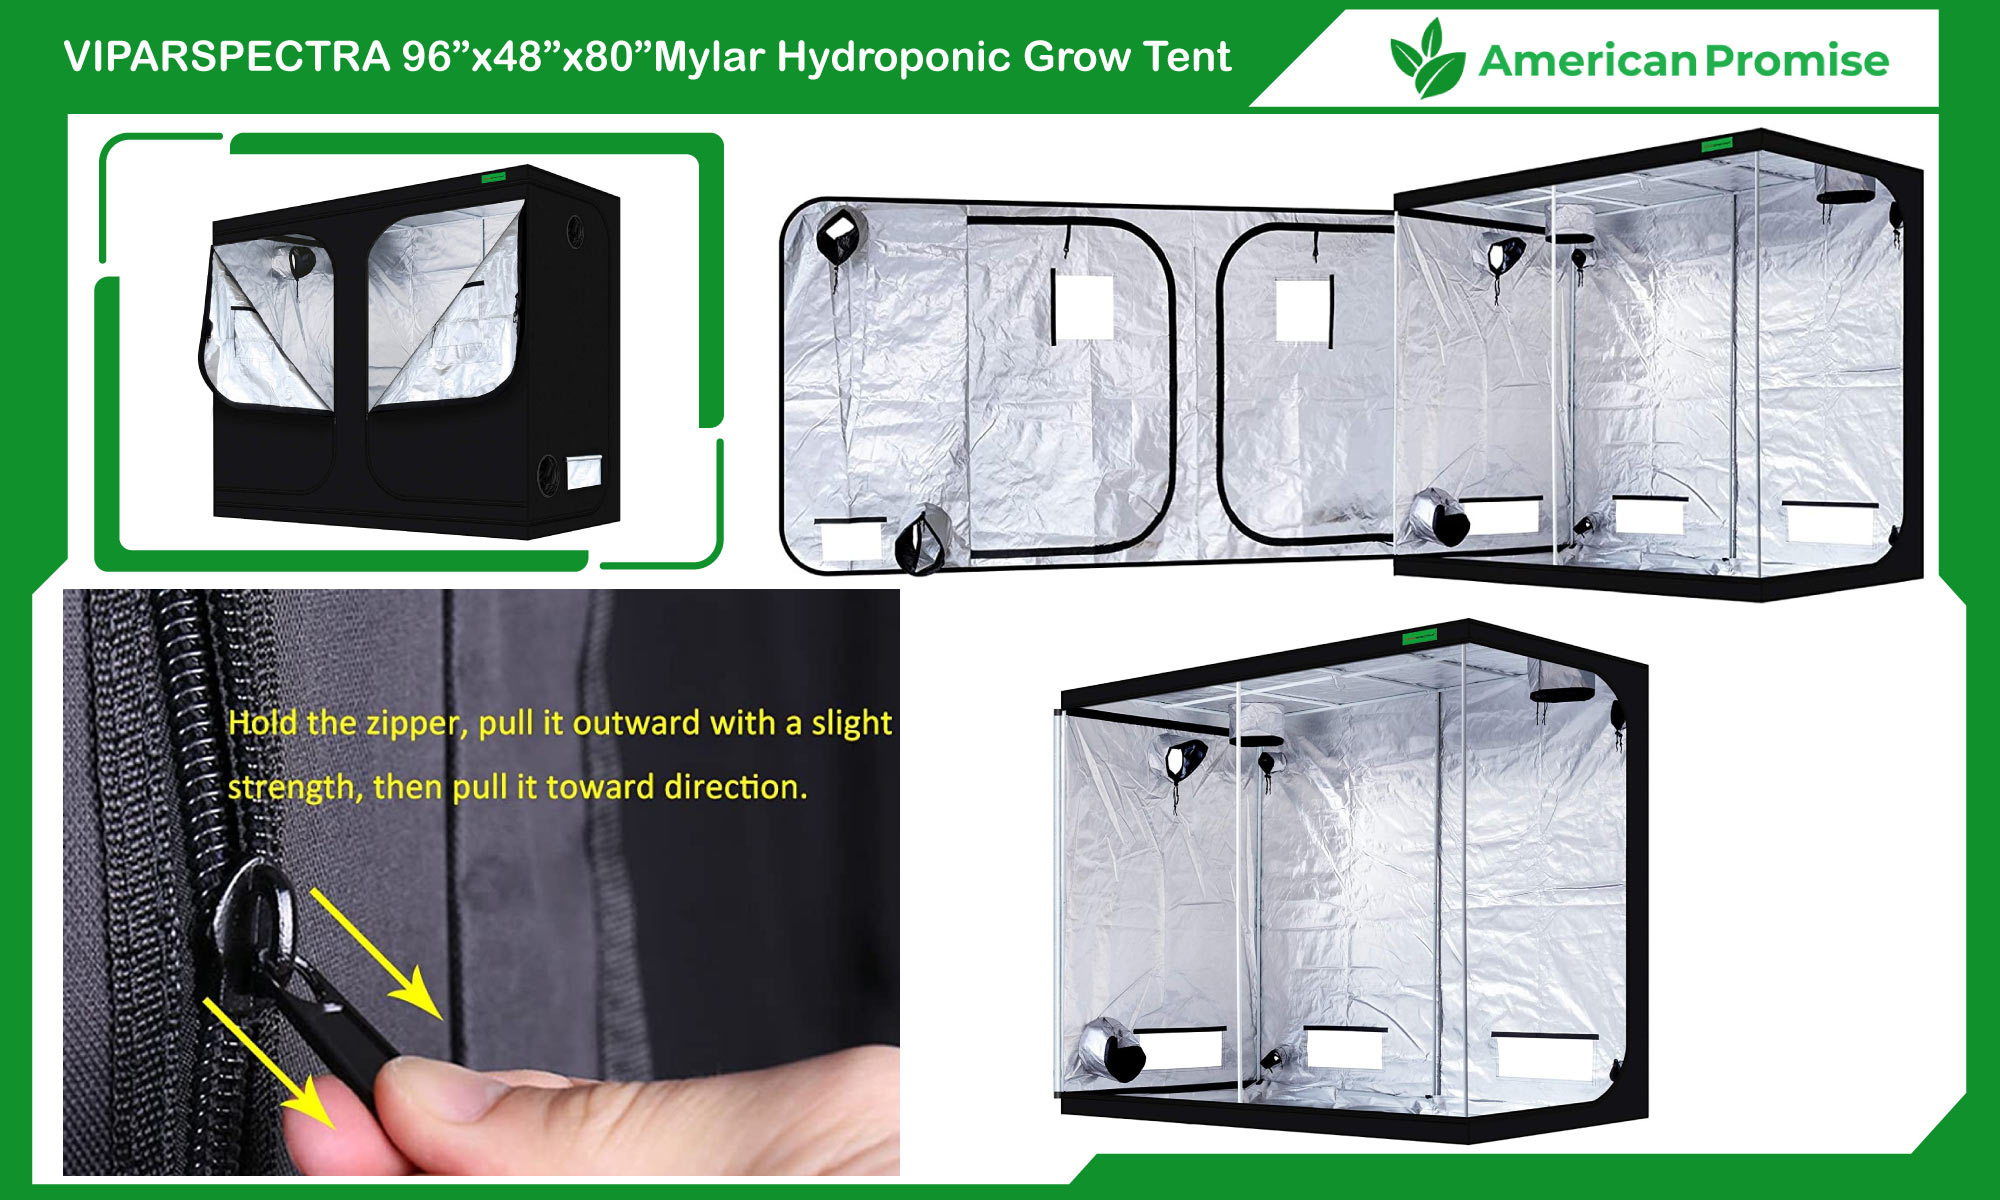 VIPARSPECTRA 96”x48”x80”Mylar Hydroponic Grow Tent